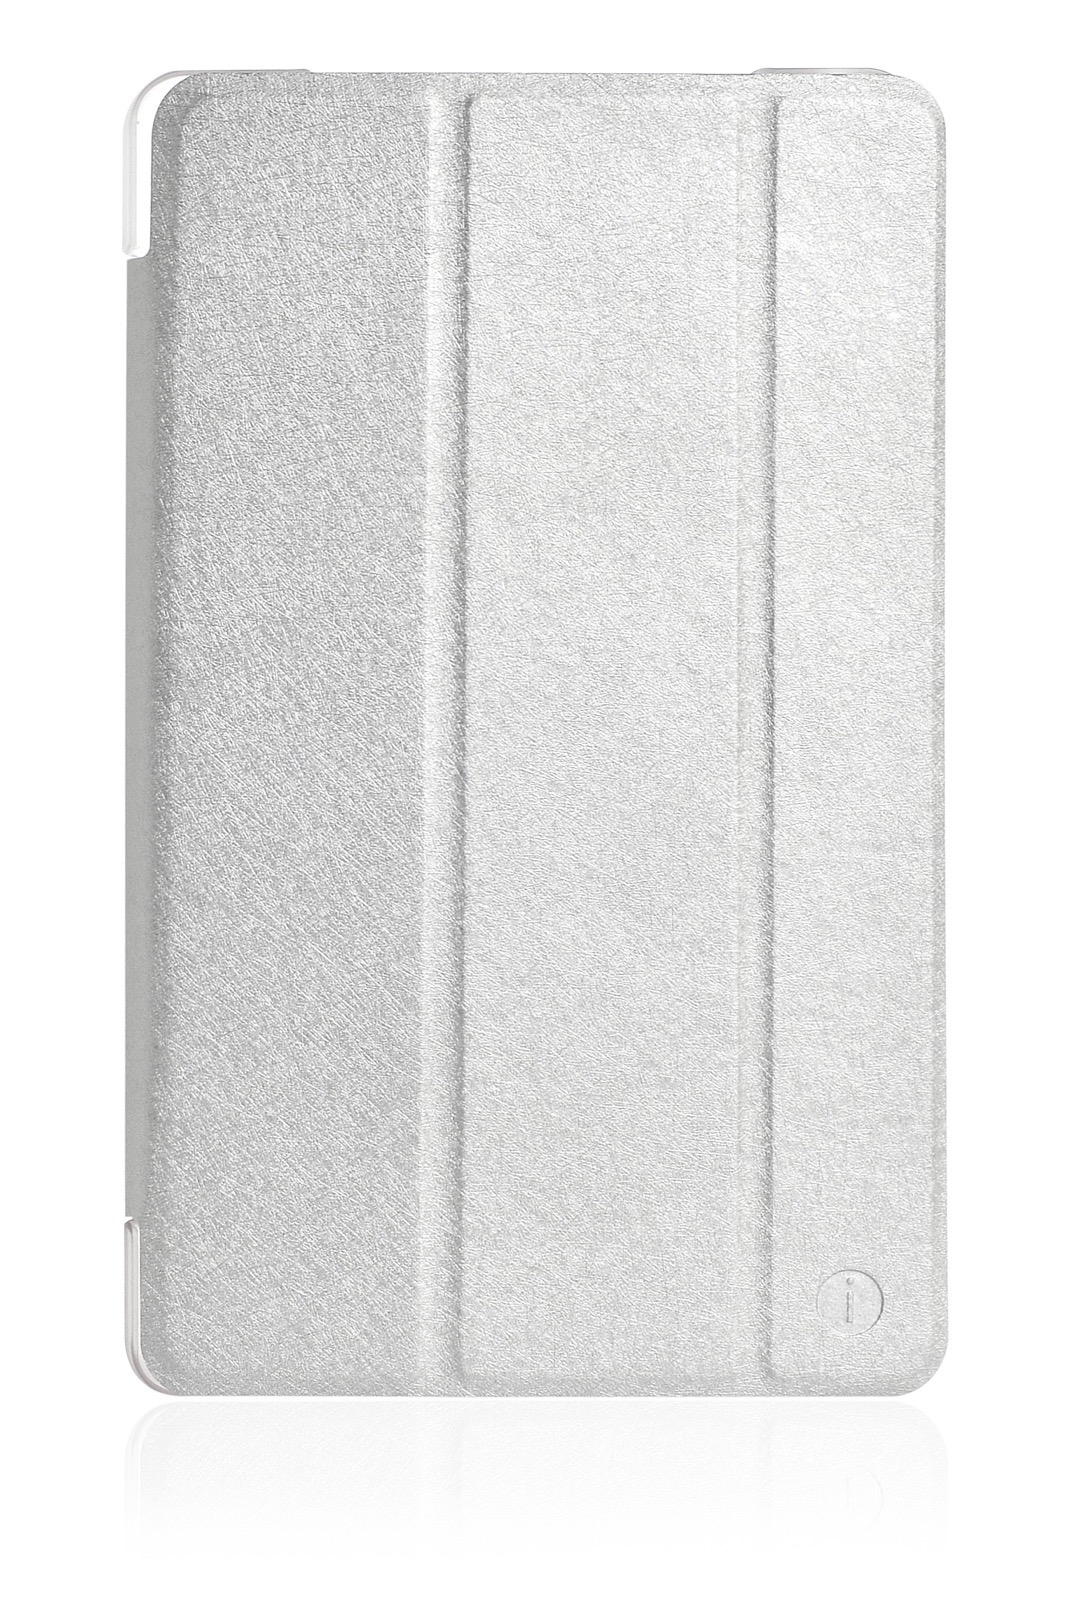 Чехол для планшета iNeez Smart книжка 908411 для Huawei Mediapad M5 Lite 8.0